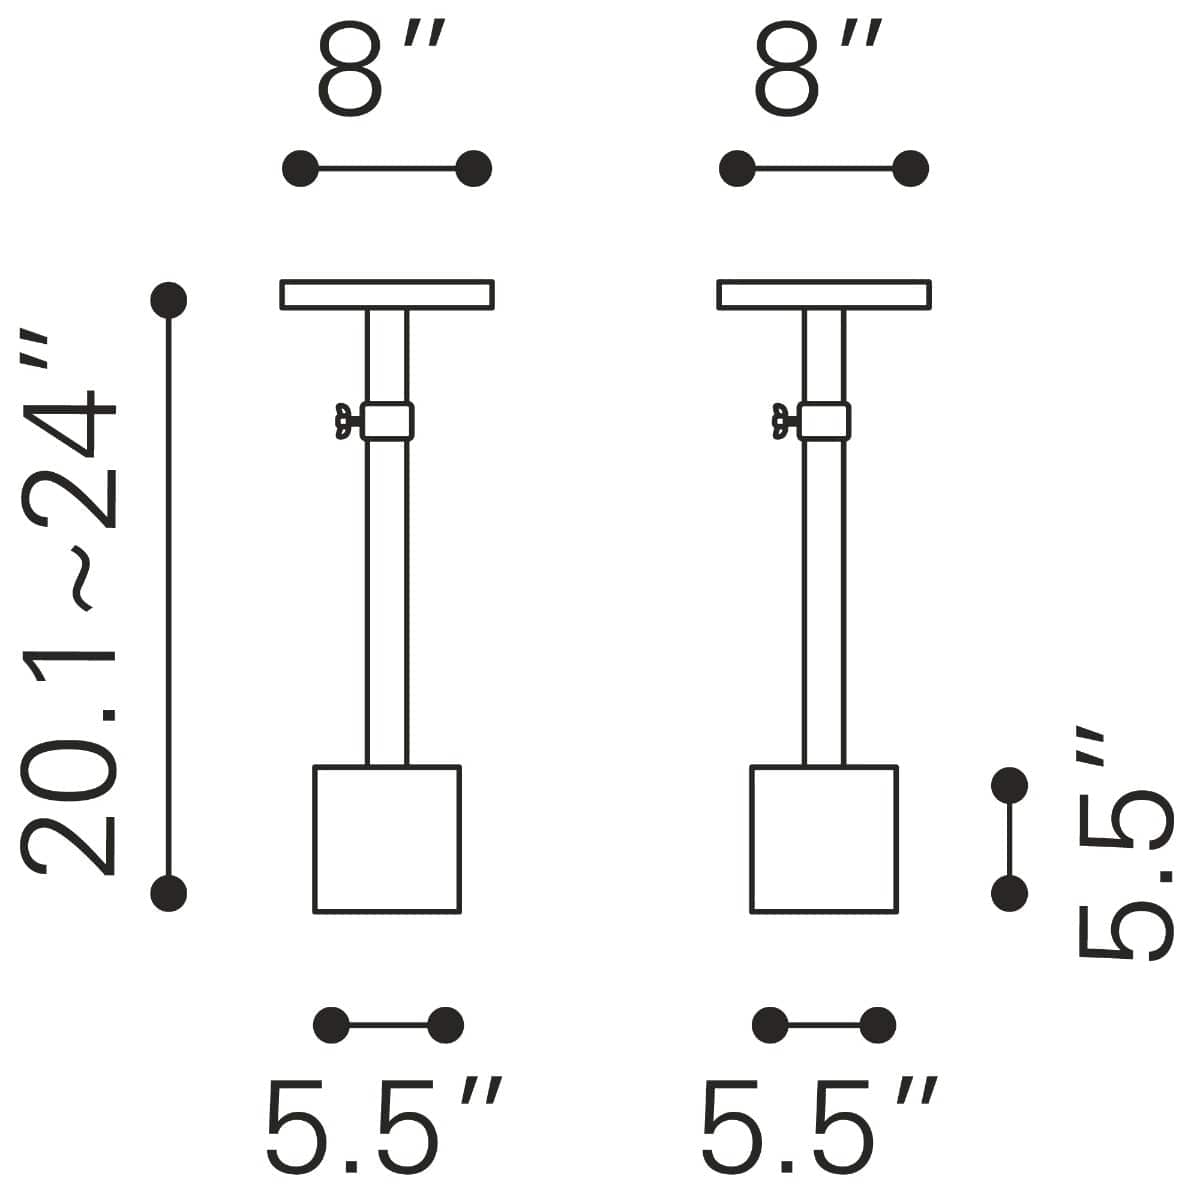 Height adjustable Josef table dimensions